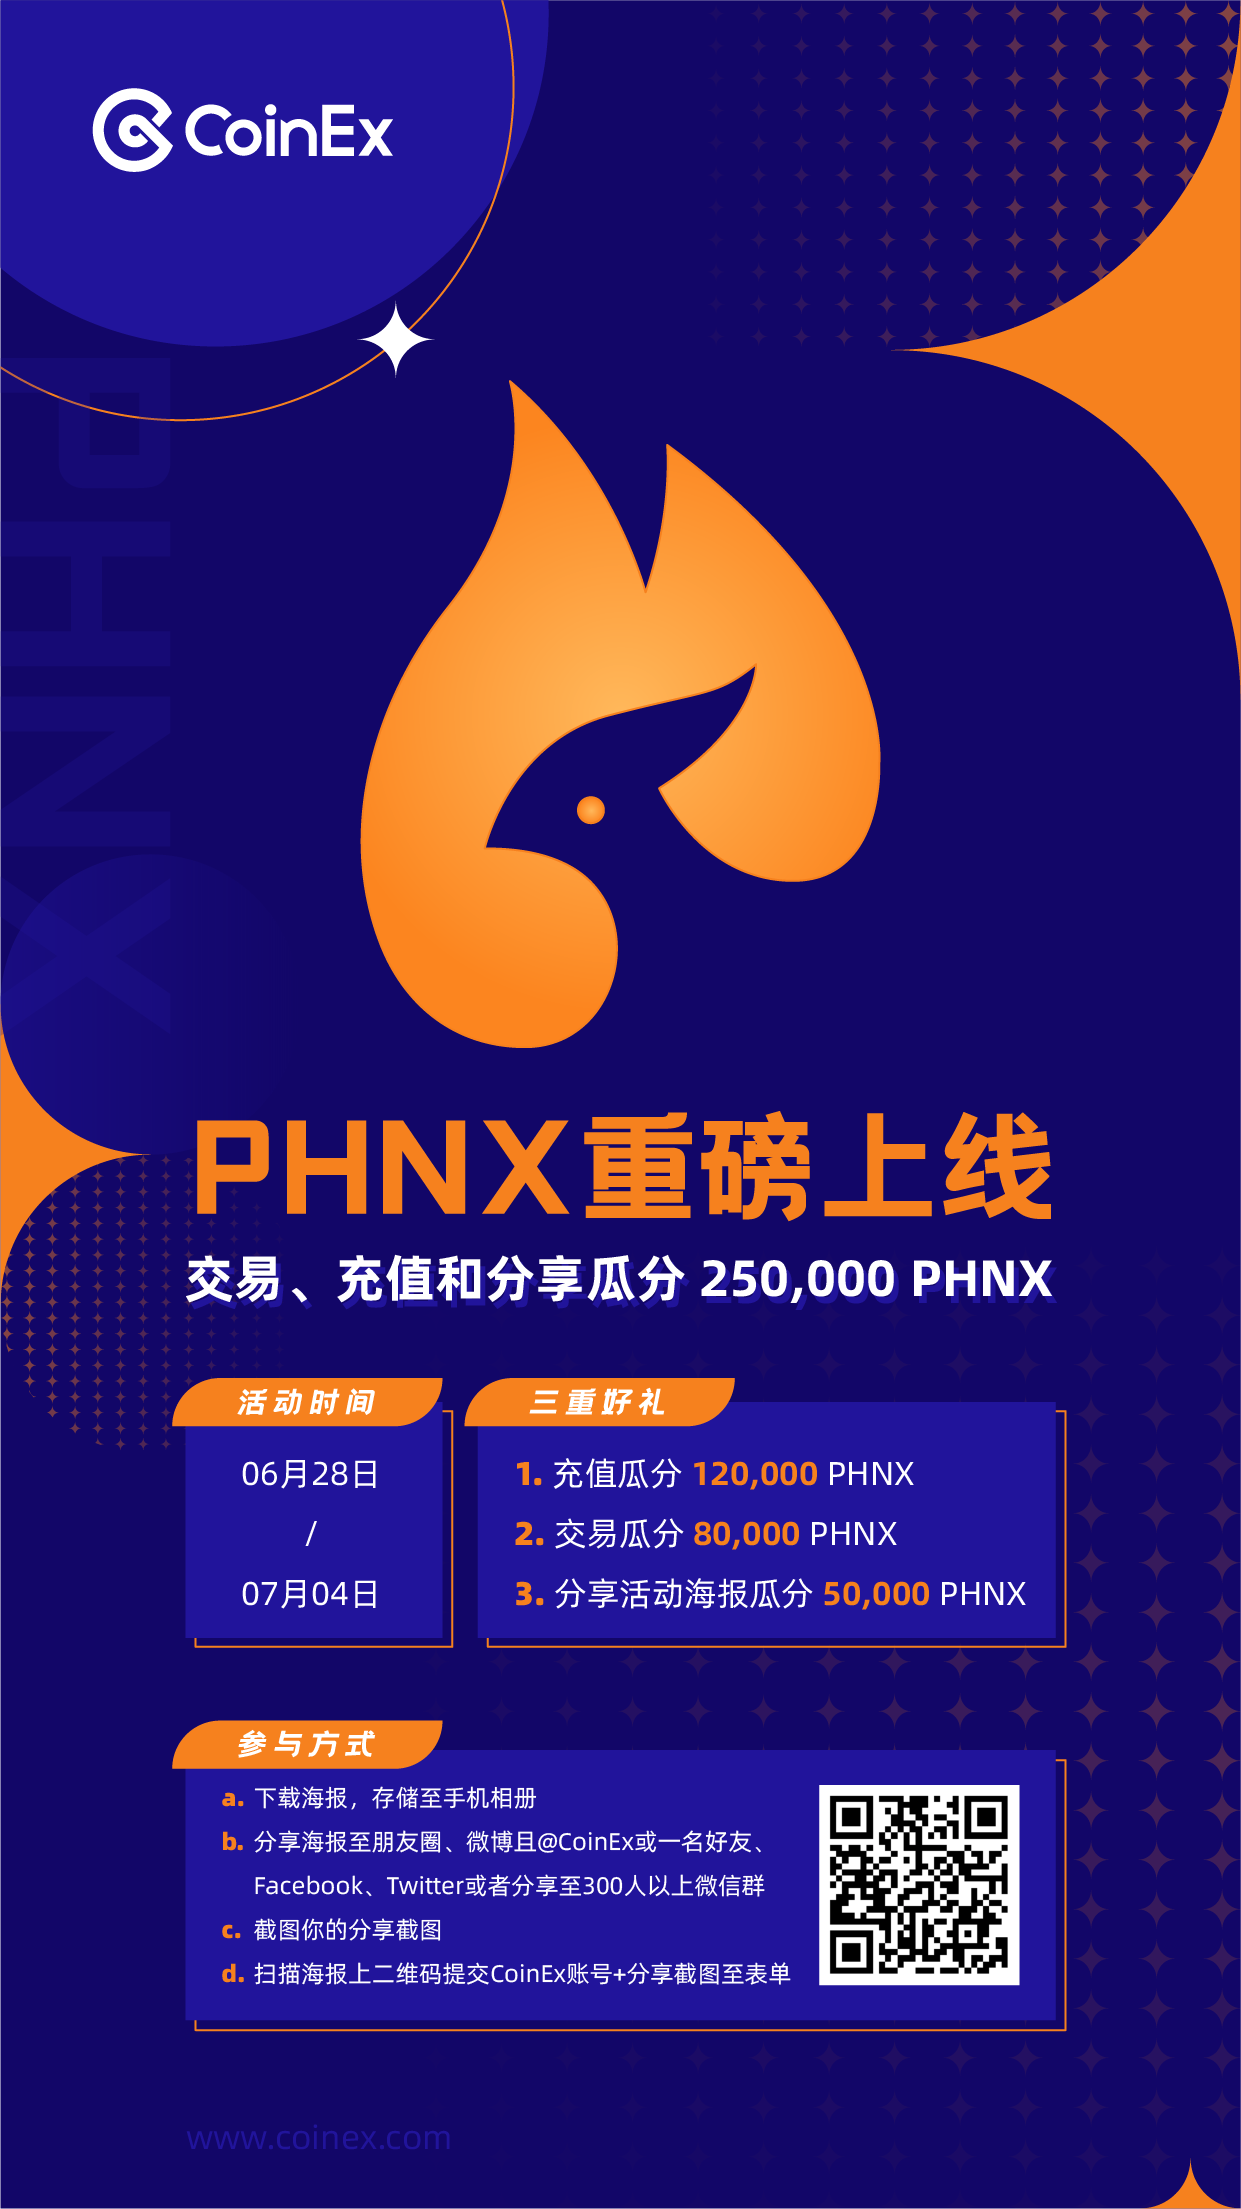 PHNX_Online_SNS-cn.png